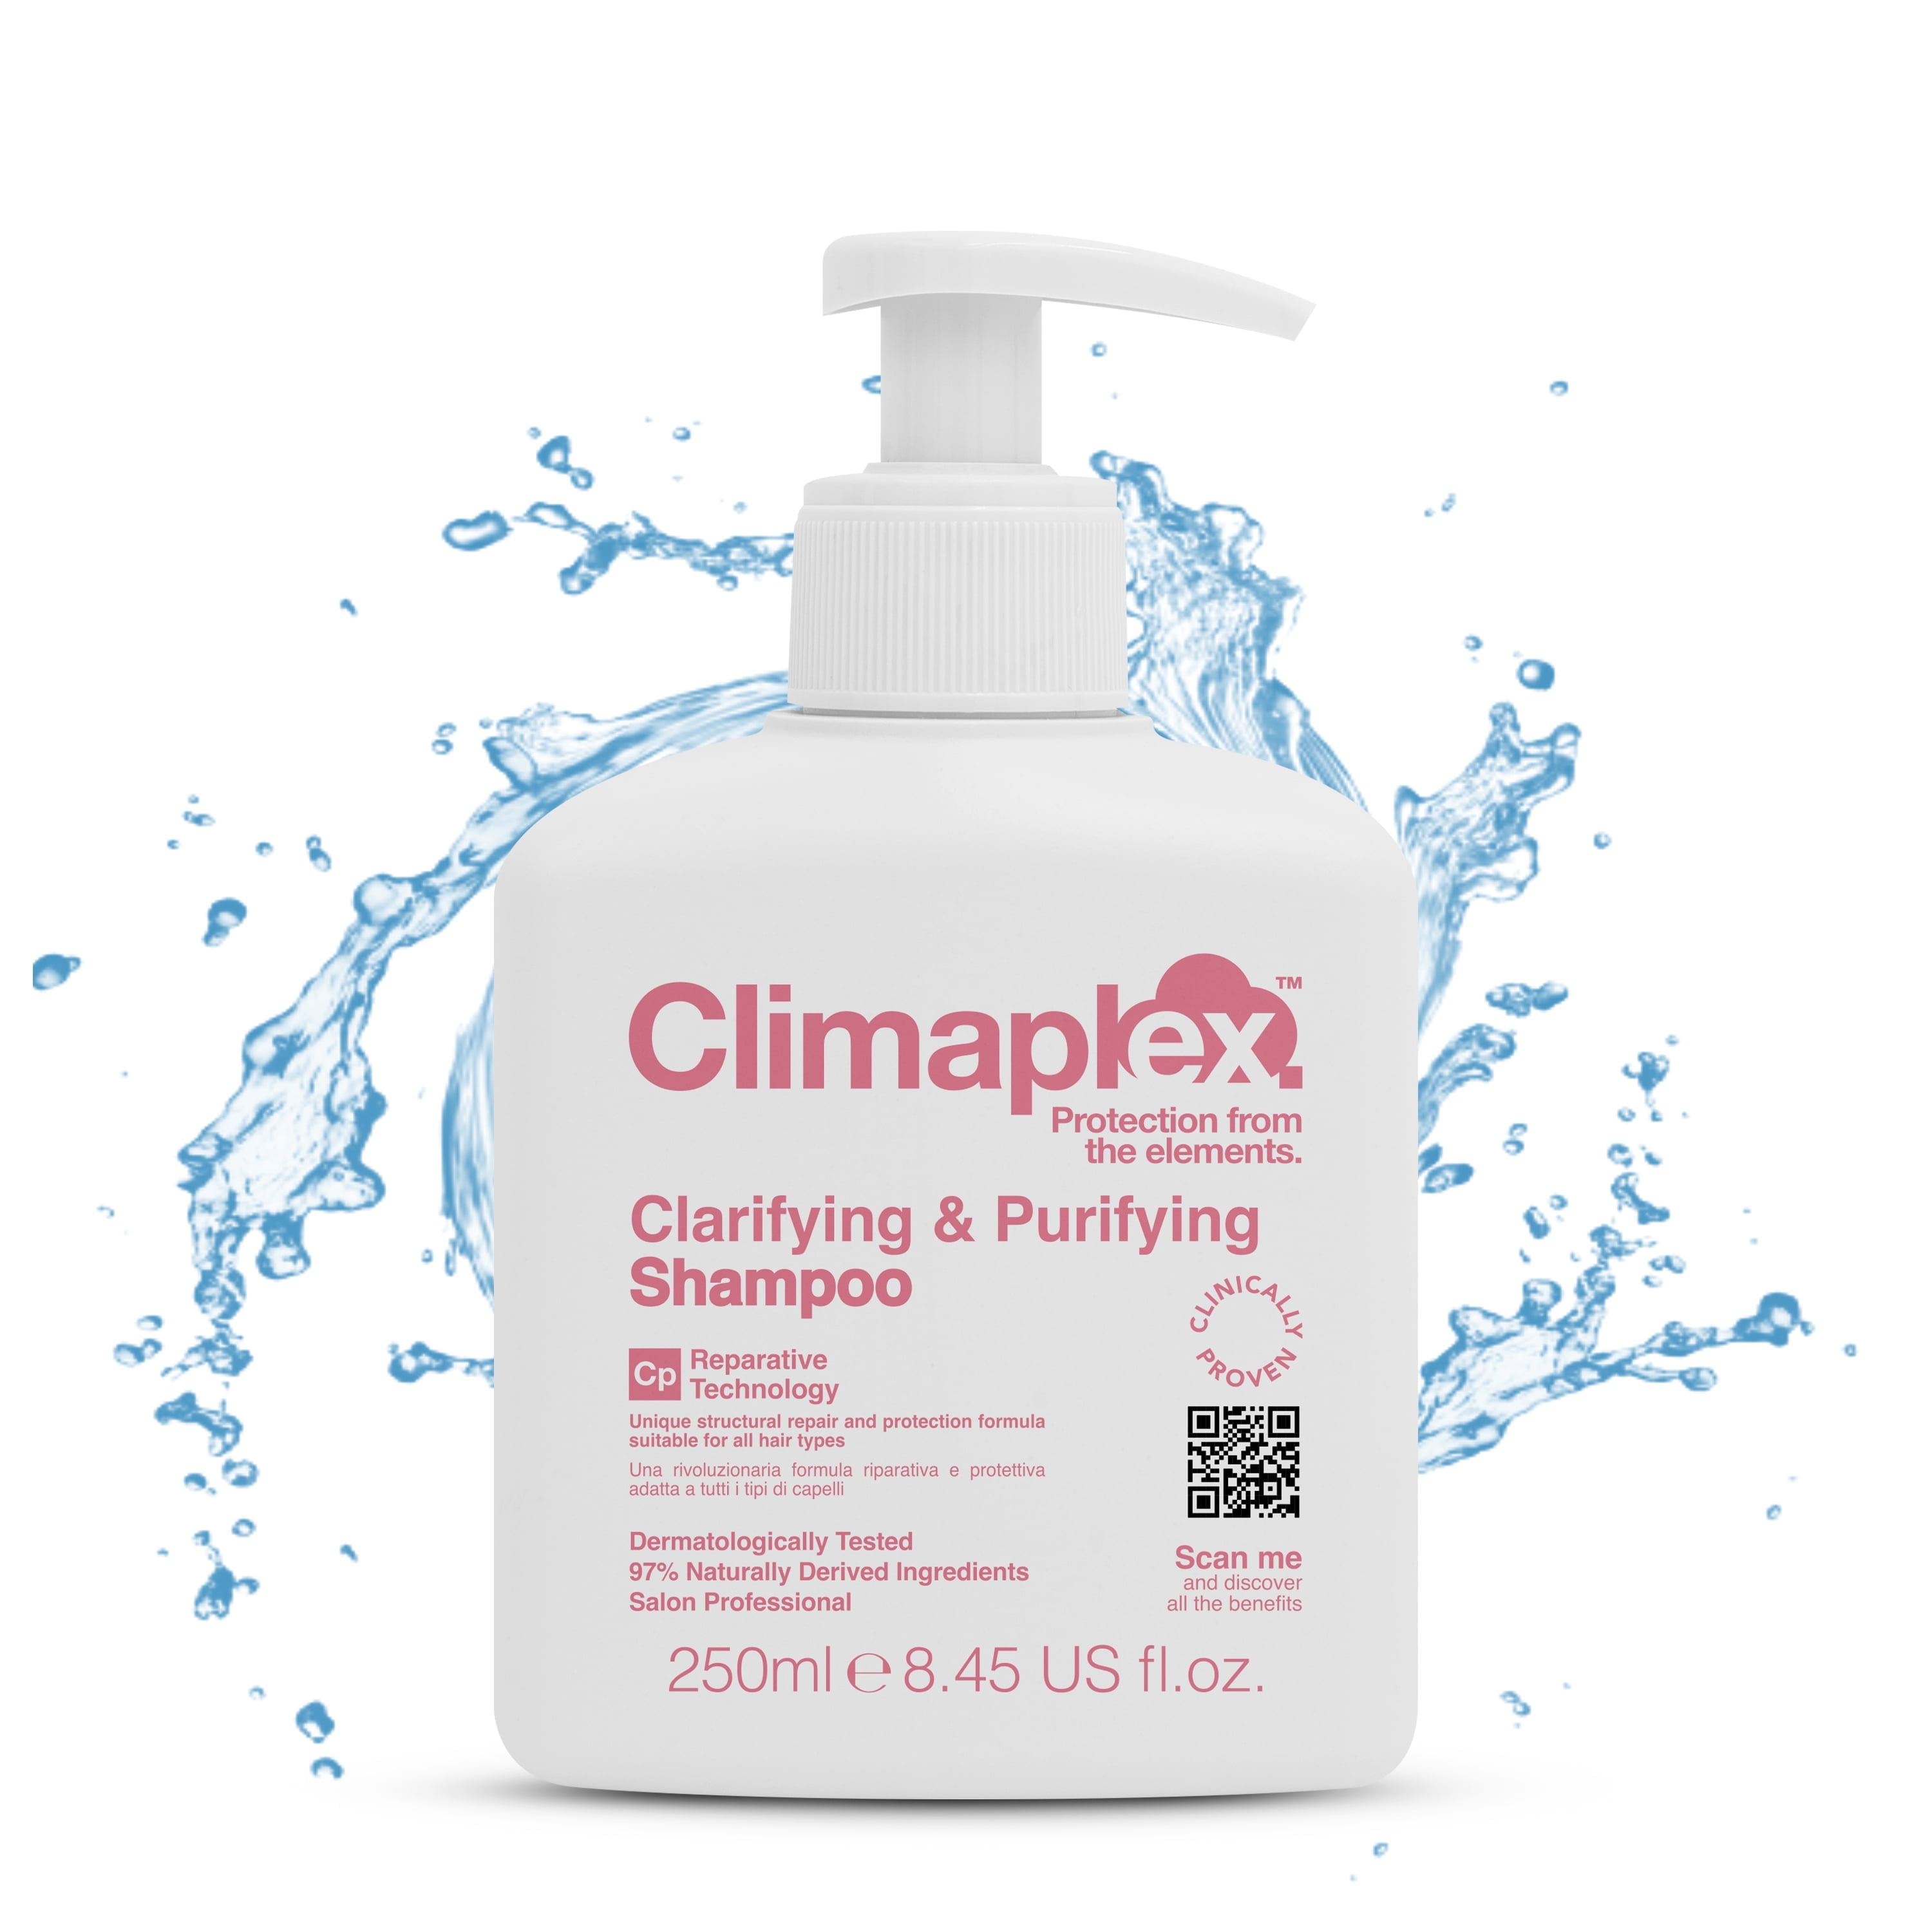 Buy Suavinex Pediatric Gel Sparkling Shampoo 400Ml deals on Suavinex brand  online